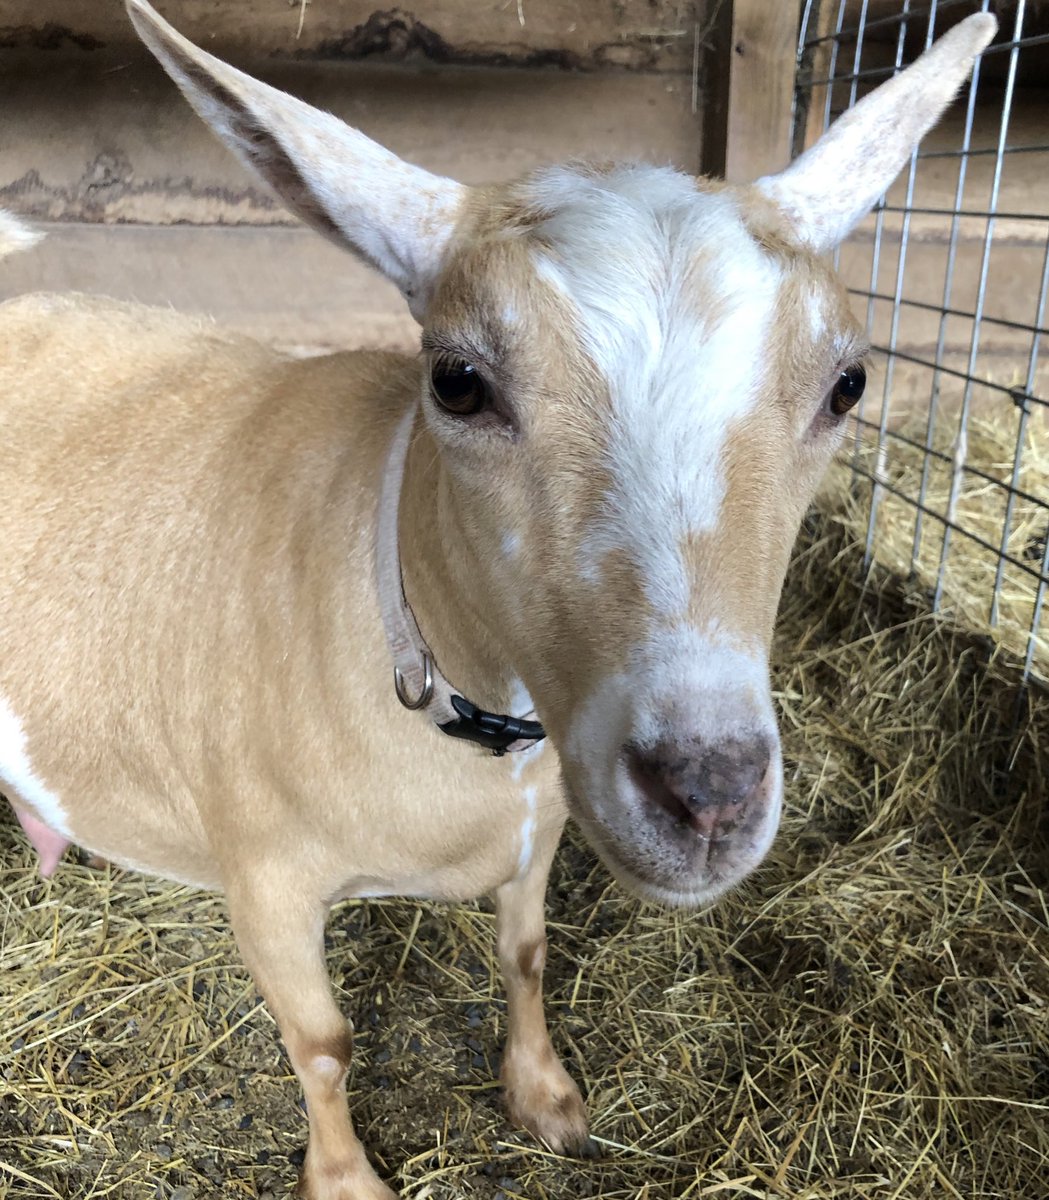 This is Nova. She’s preggers. She’s also super precious and a great goat mom.